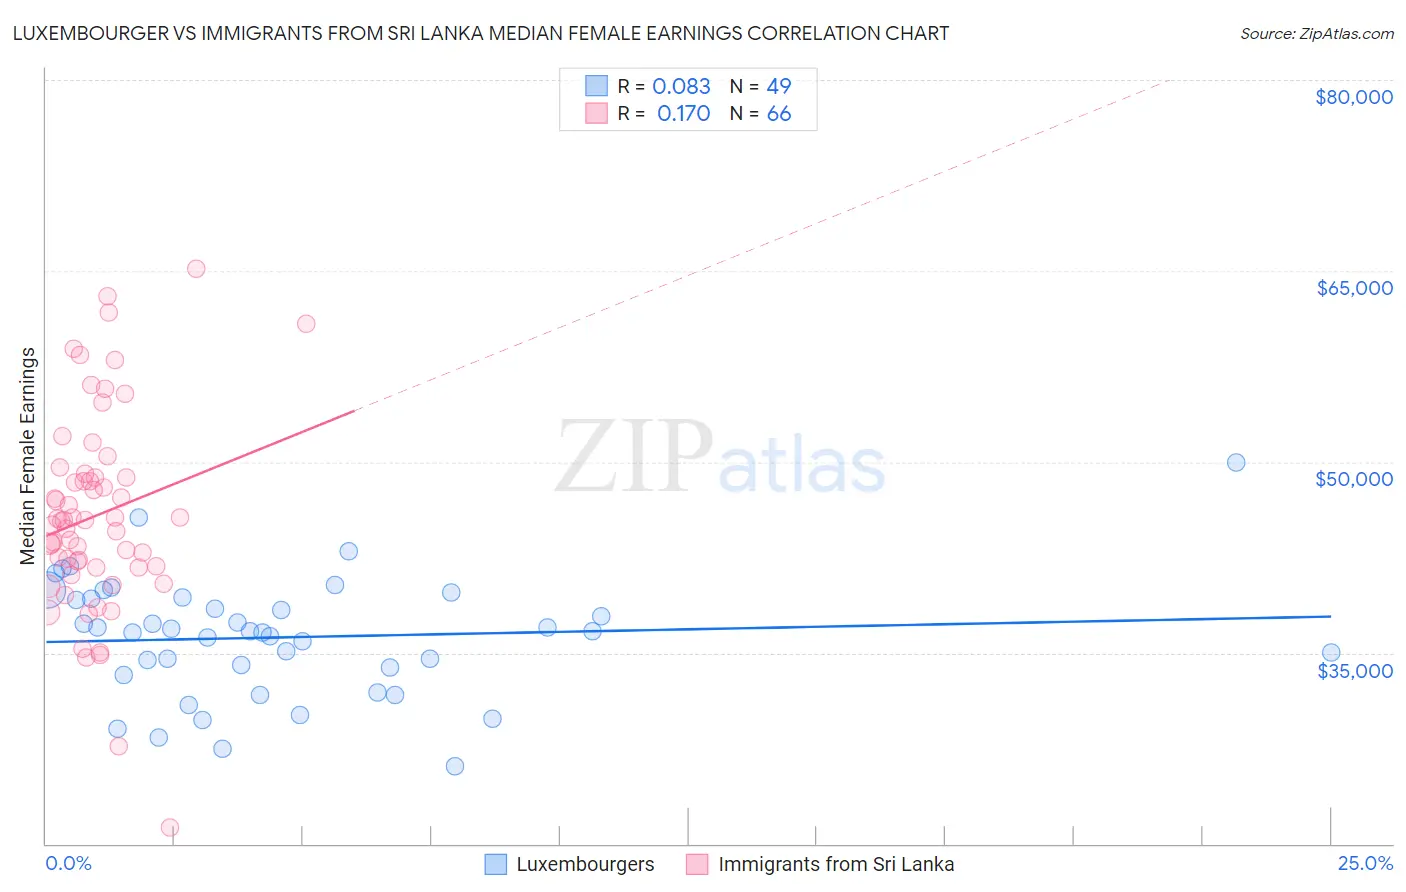 Luxembourger vs Immigrants from Sri Lanka Median Female Earnings